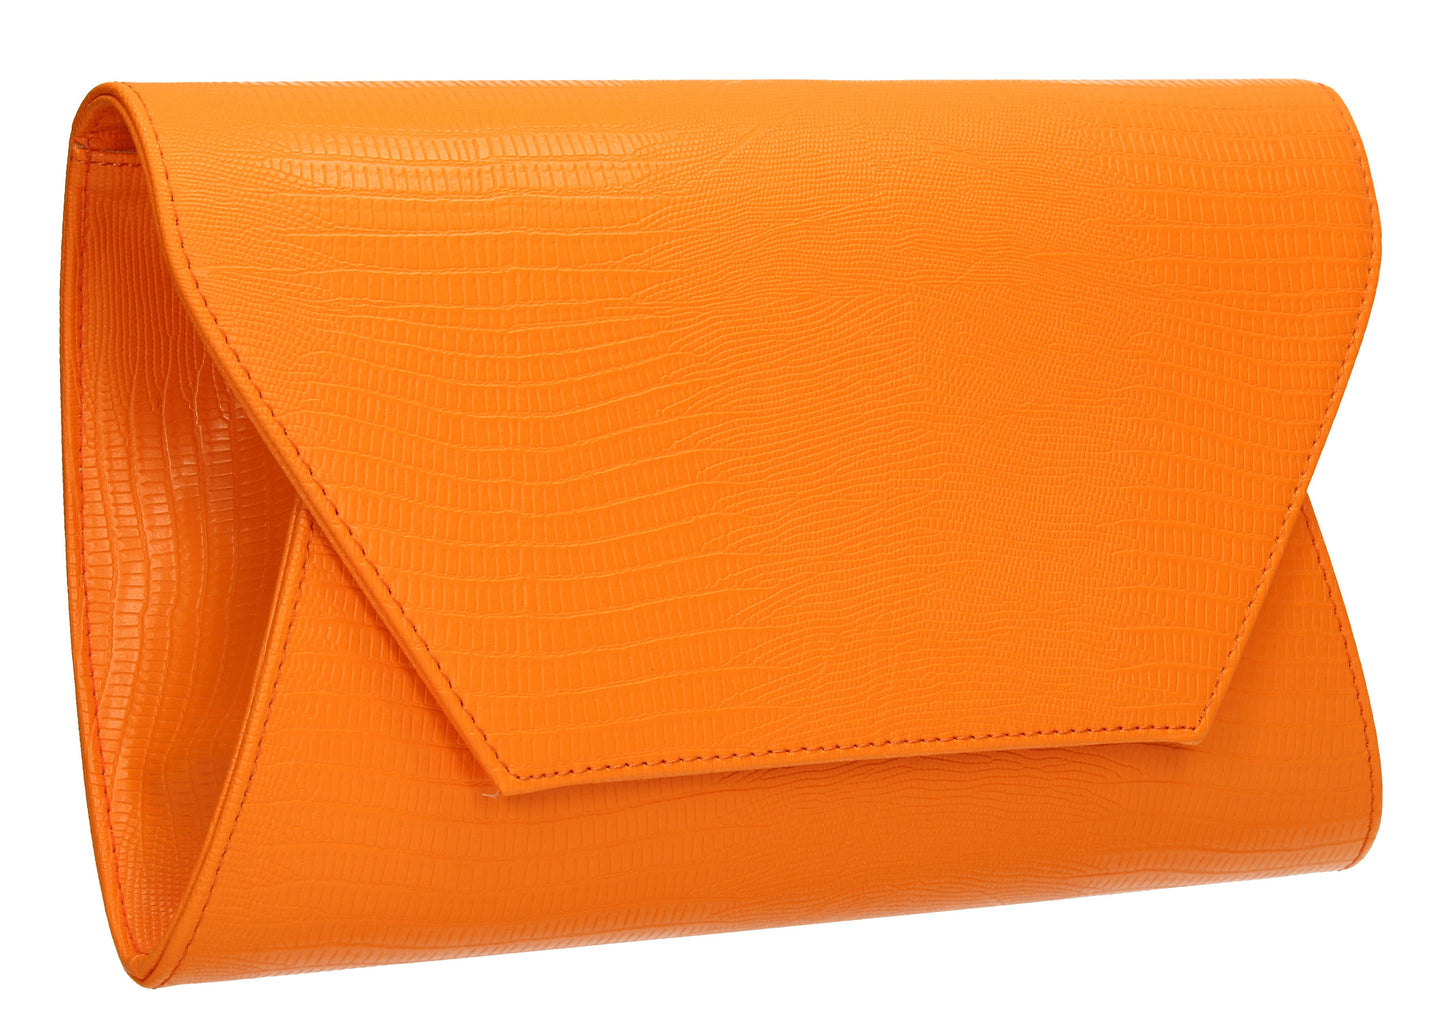 SWANKYSWANS Tania Clutch Bag Orange Cute Cheap Clutch Bag For Weddings School and Work